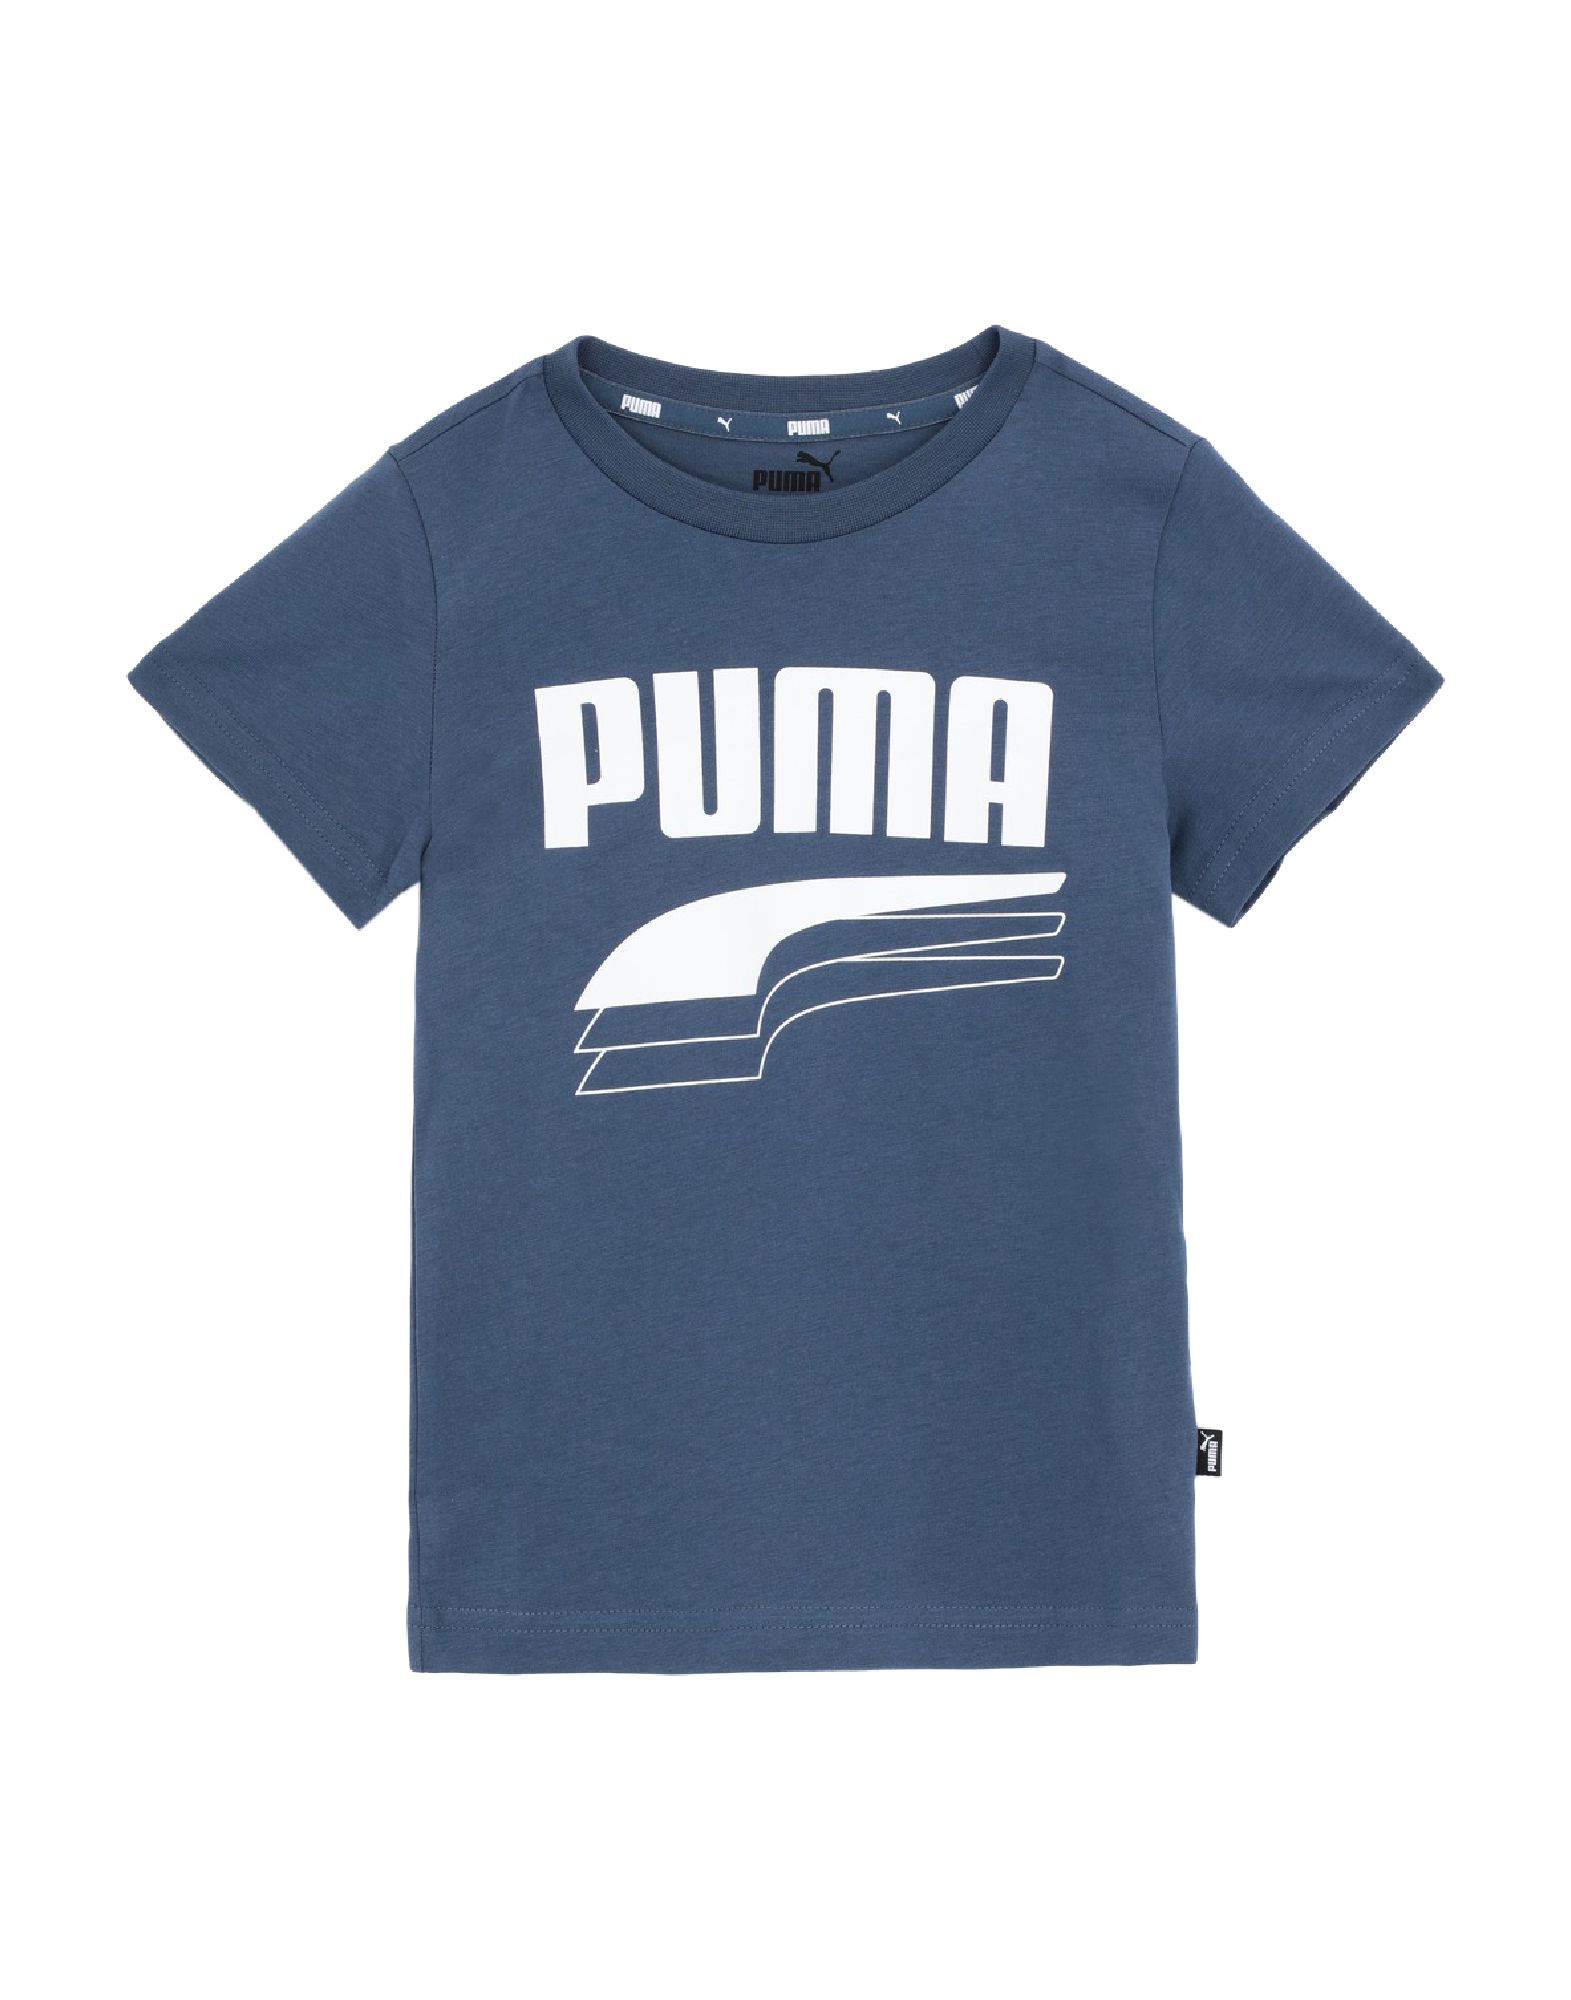 Puma Kids' T-shirts In Slate Blue